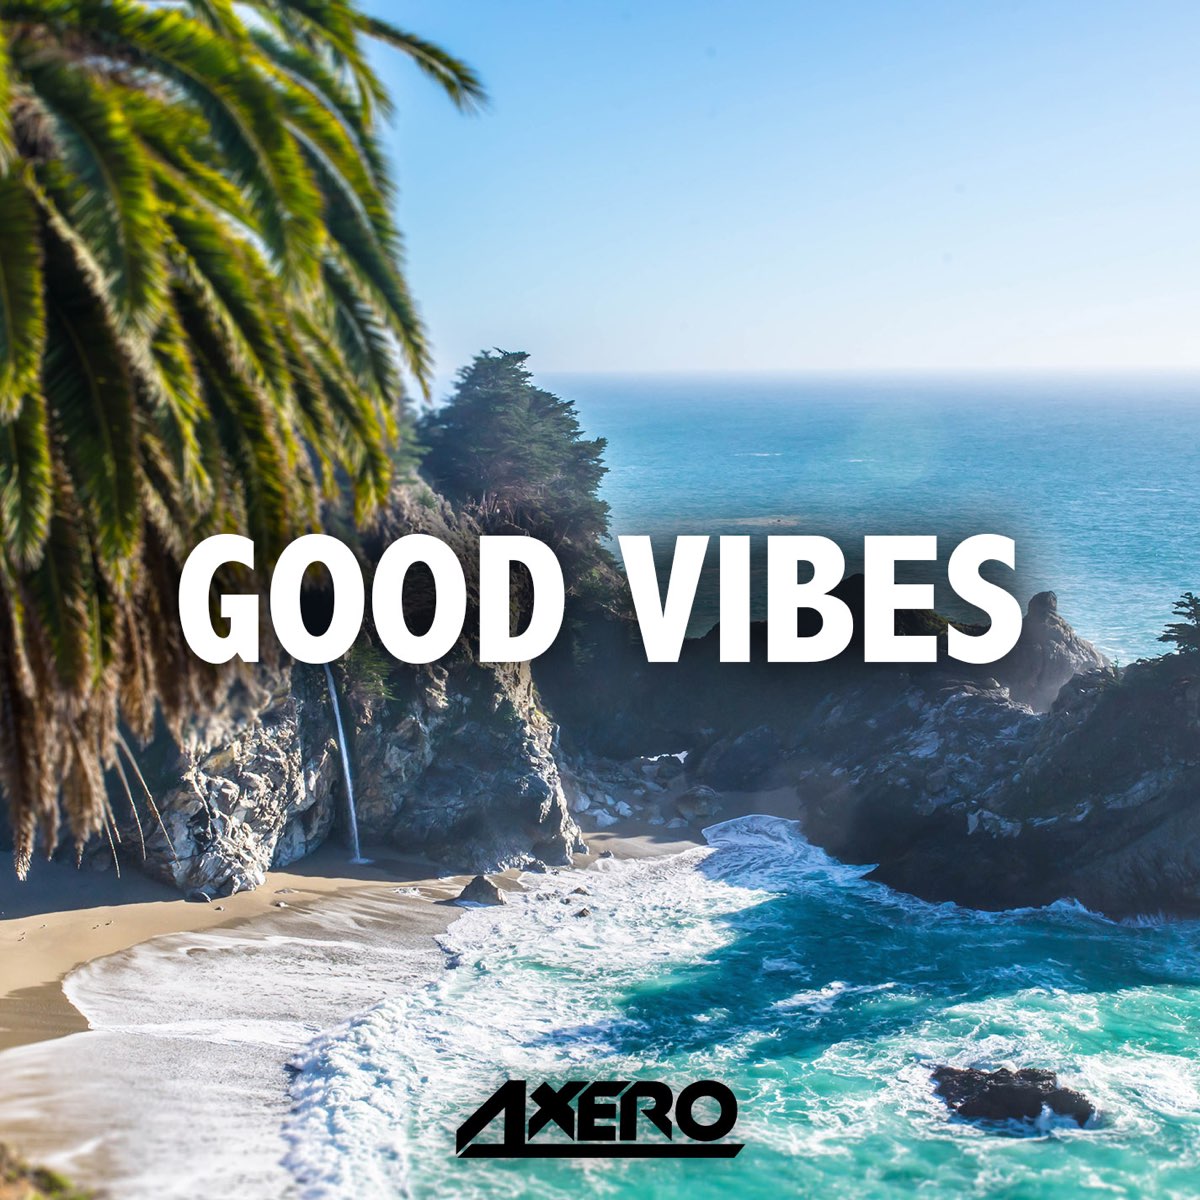 Good Vibes - Single by Axero on Apple Music